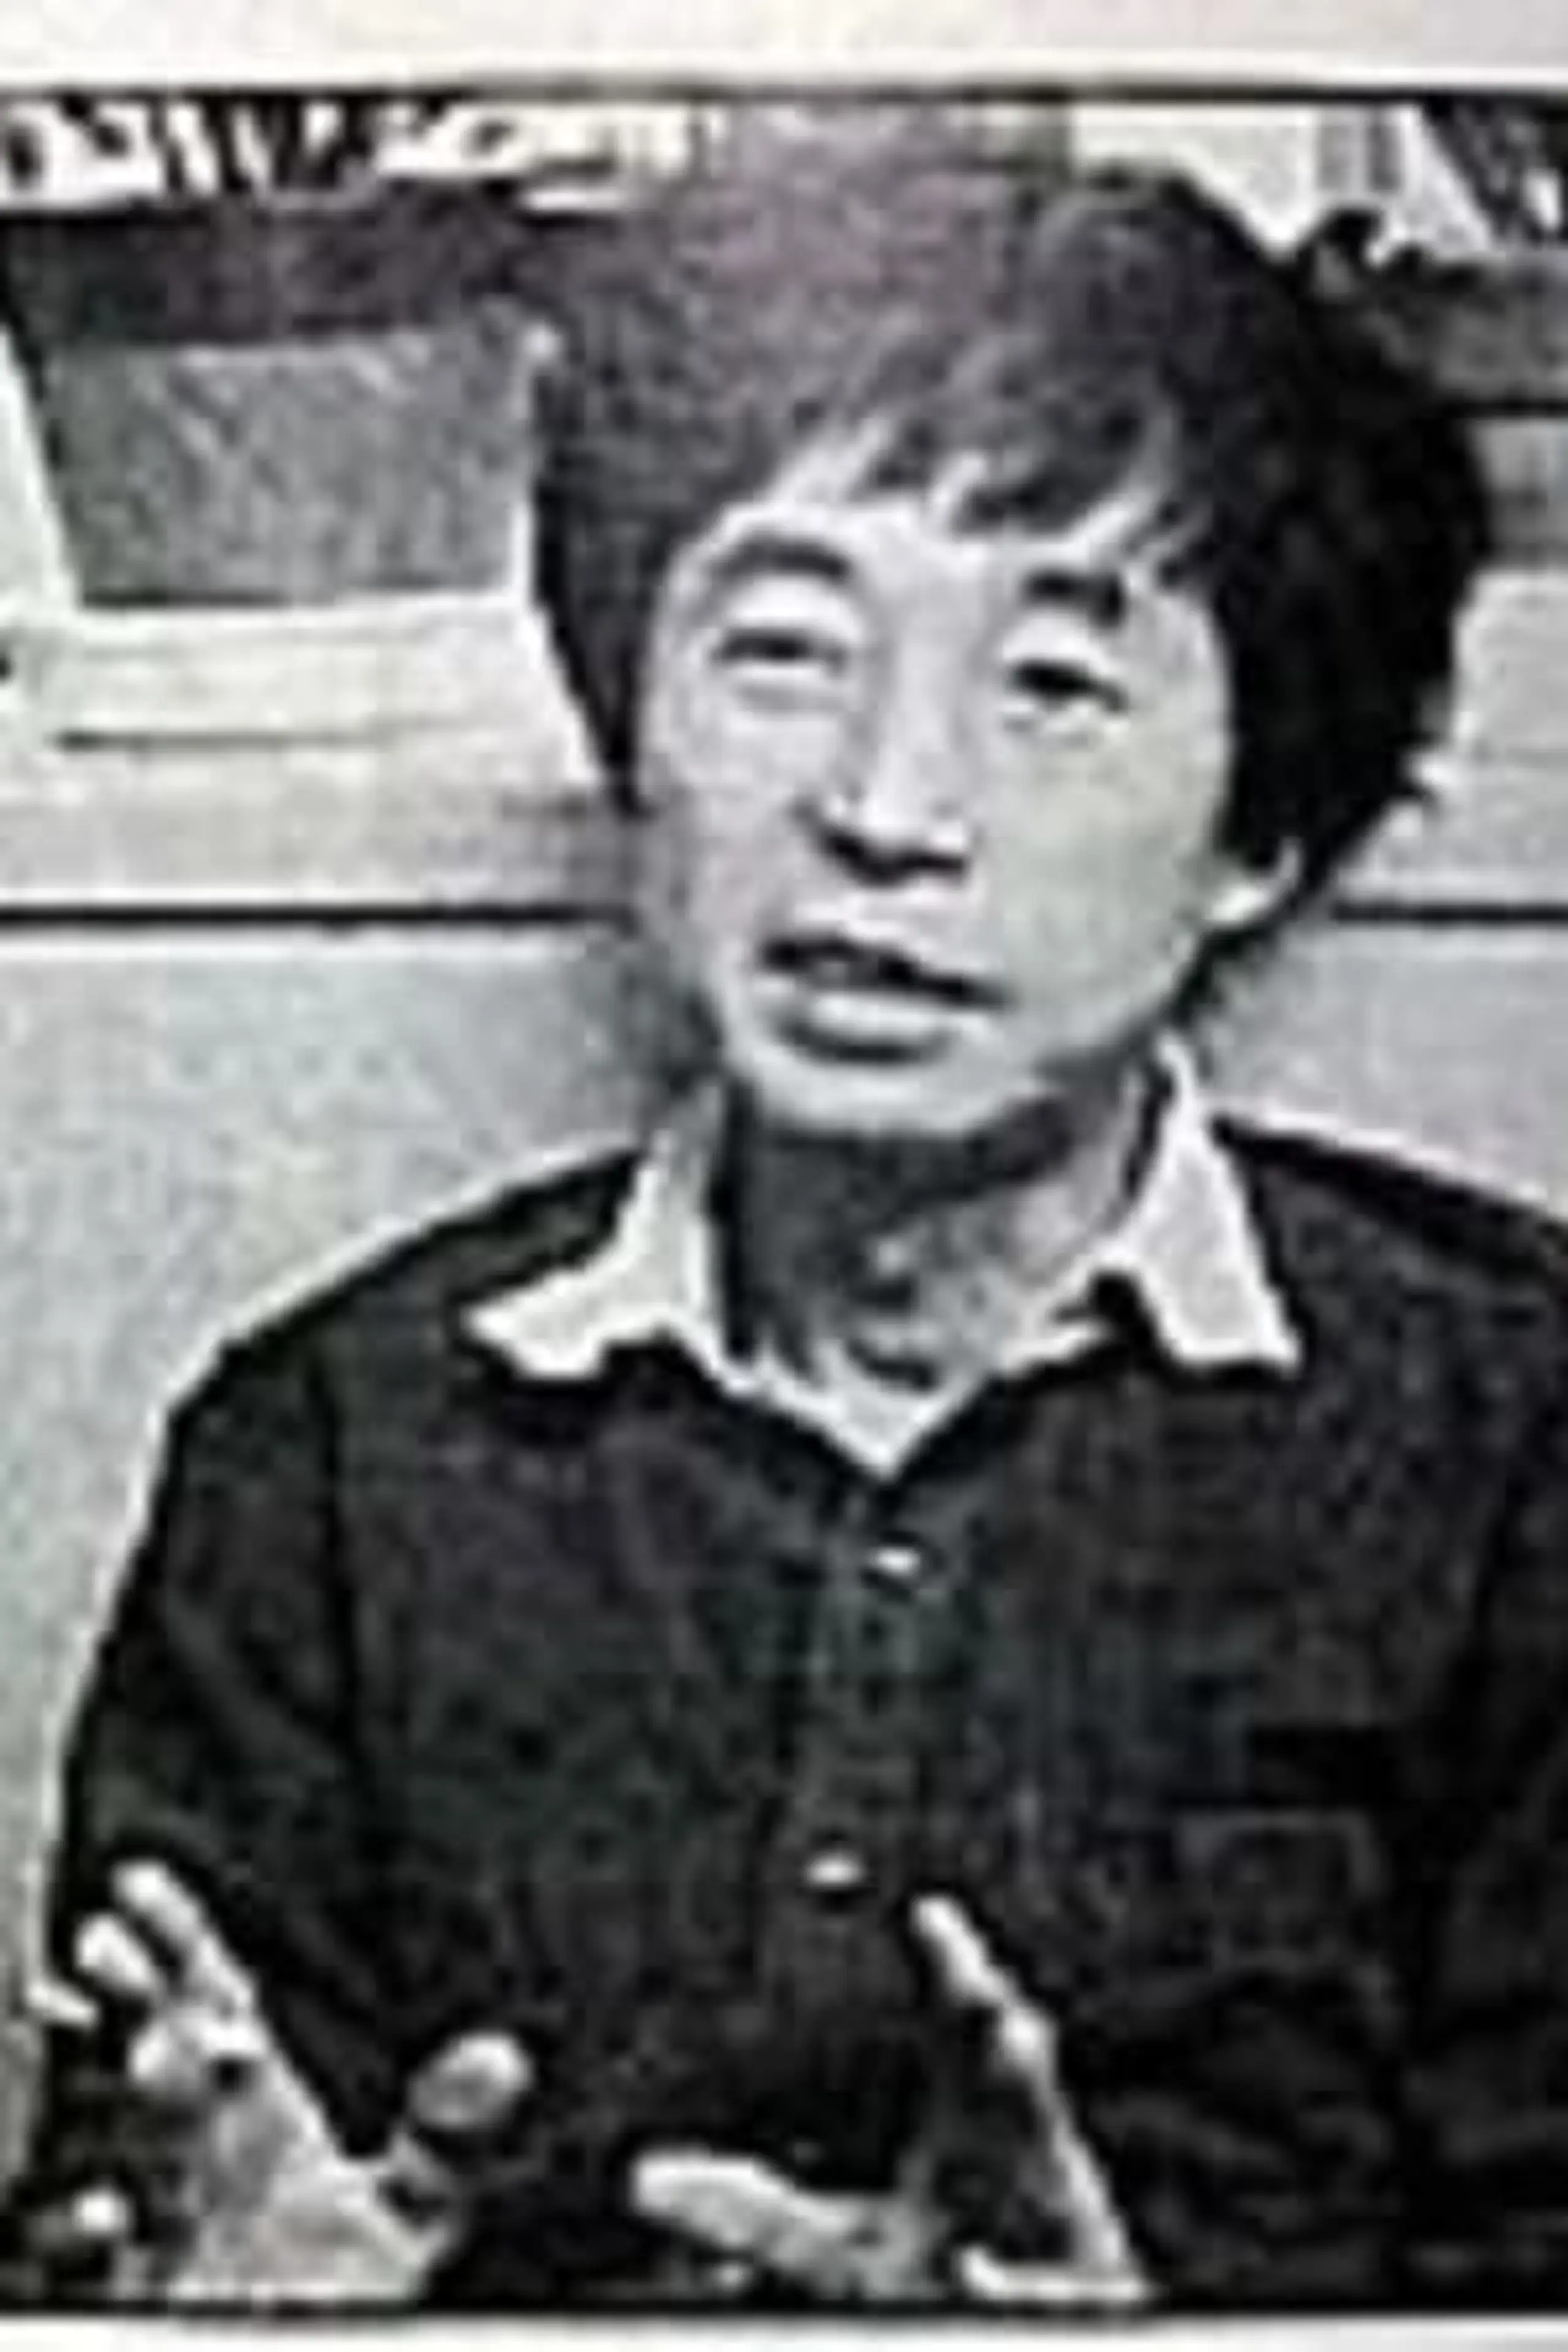 Masahiro Yamada